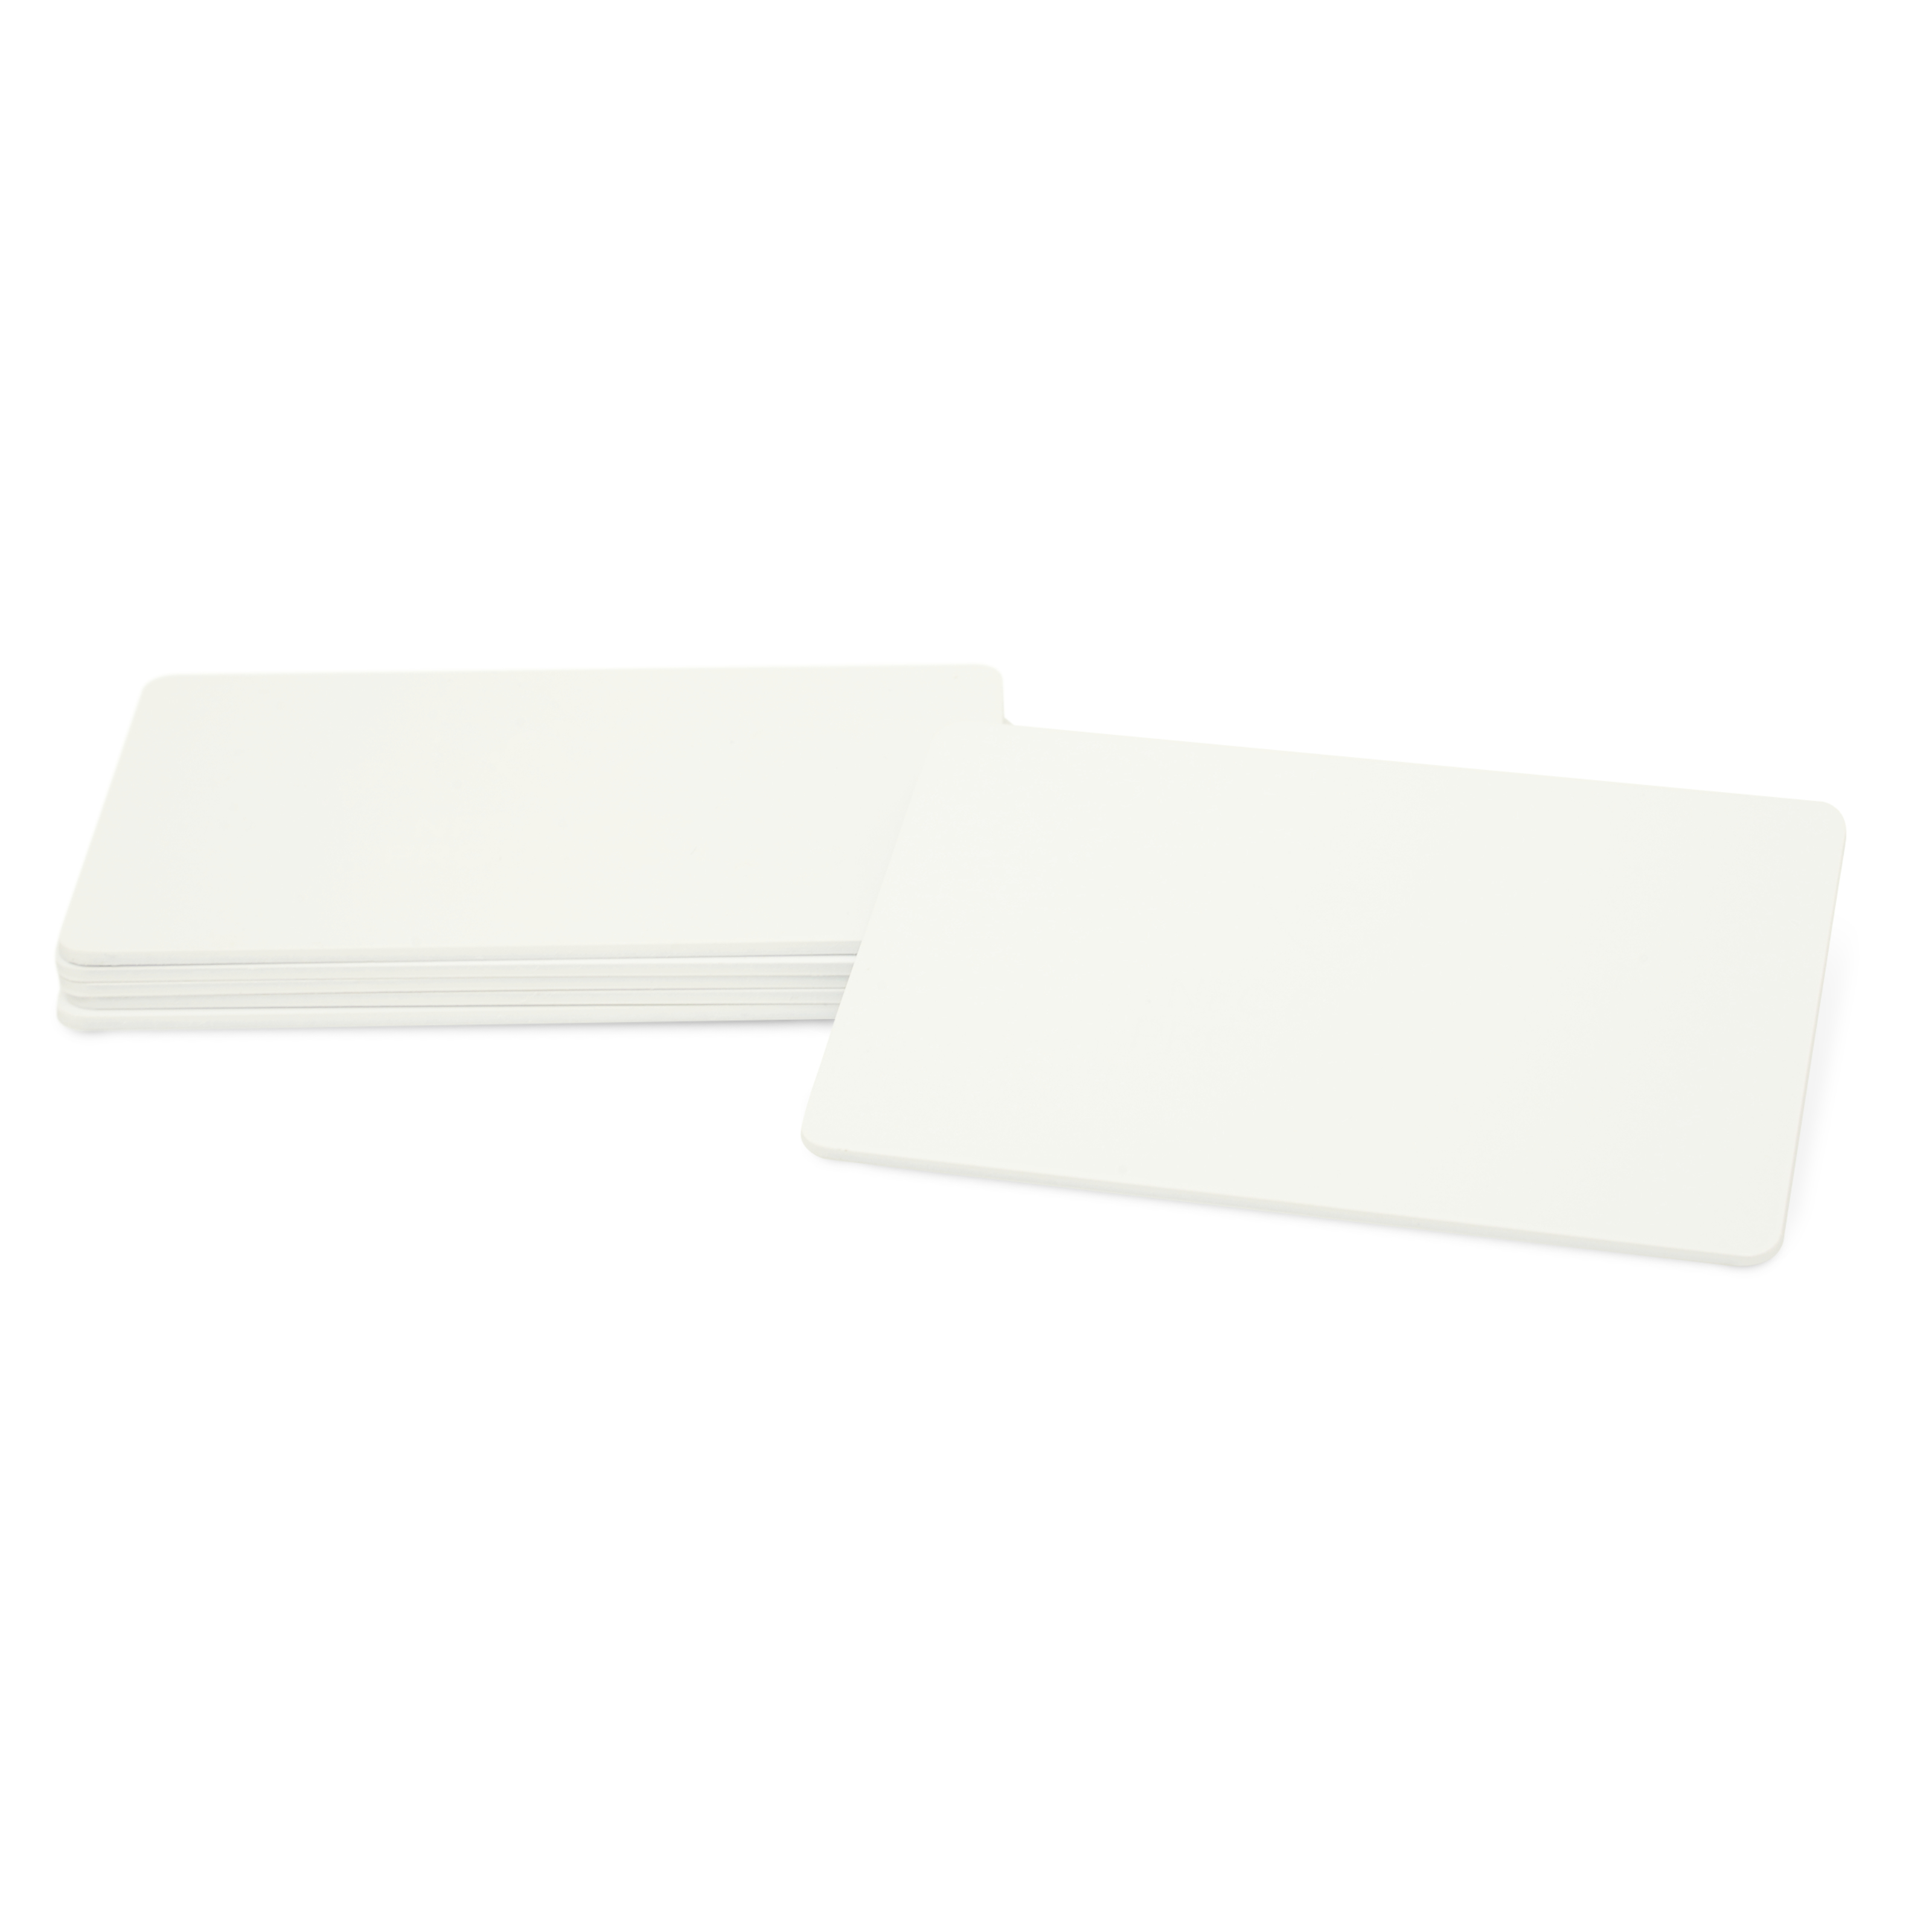 NFC- & RFID-Schutzkarte – 85,6 x 54 mm − matt weiß